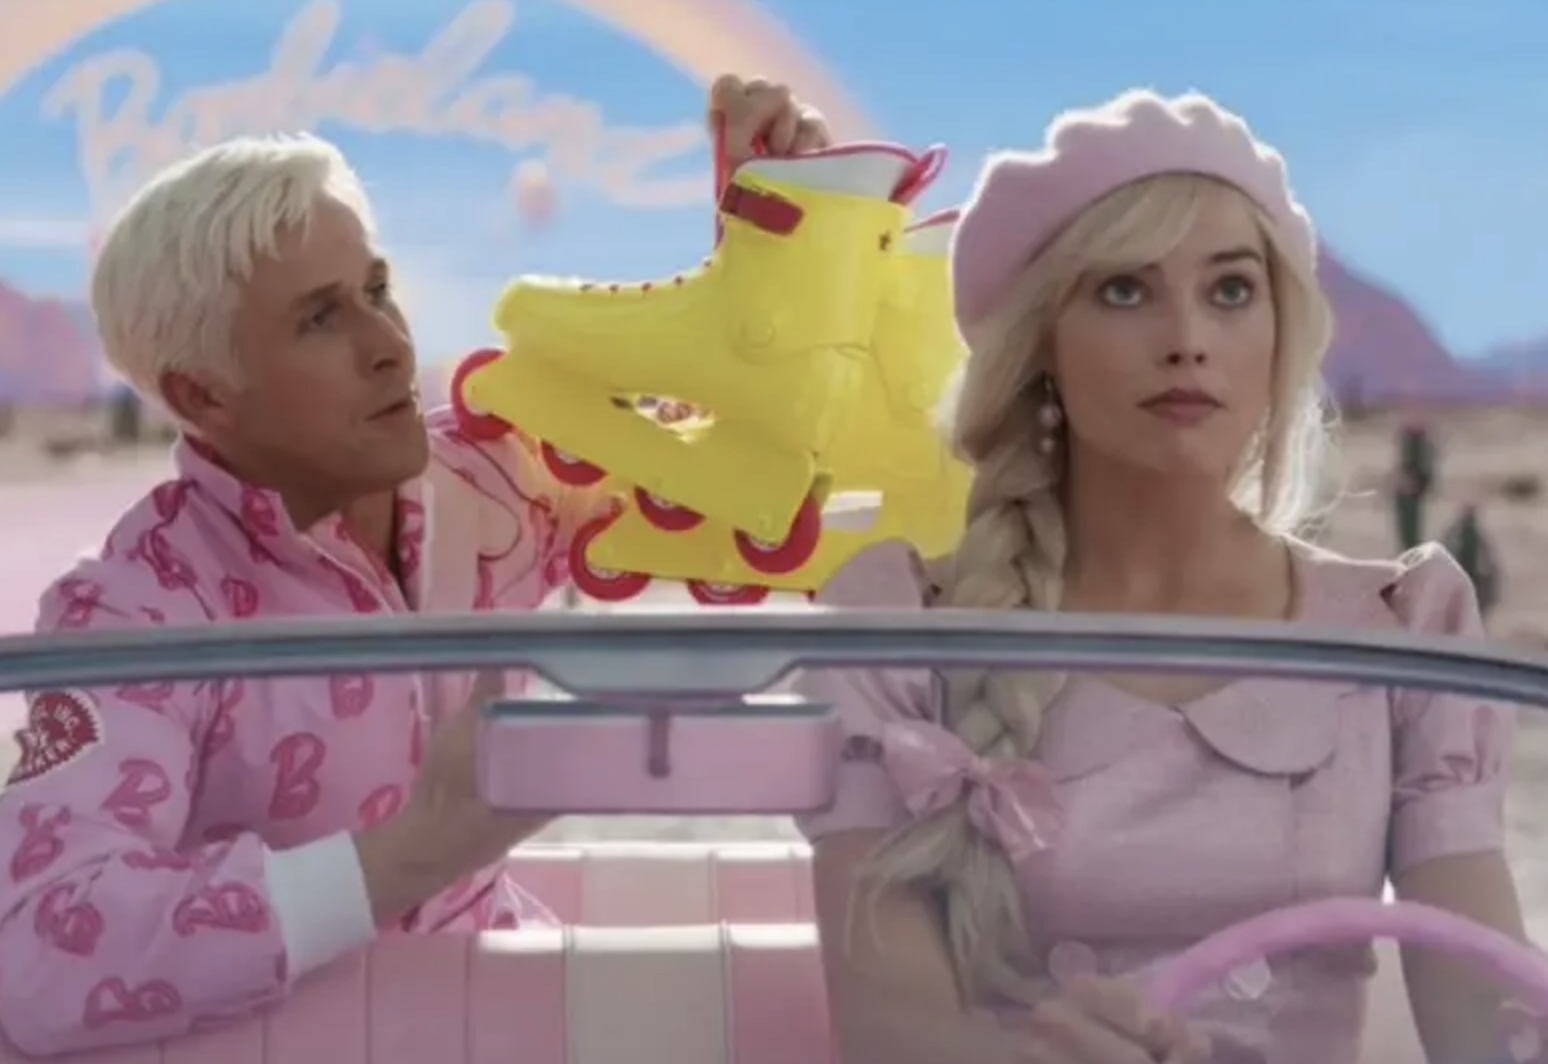 Ryan Gosling as Ken holding skates and Margot as Barbie driving a car